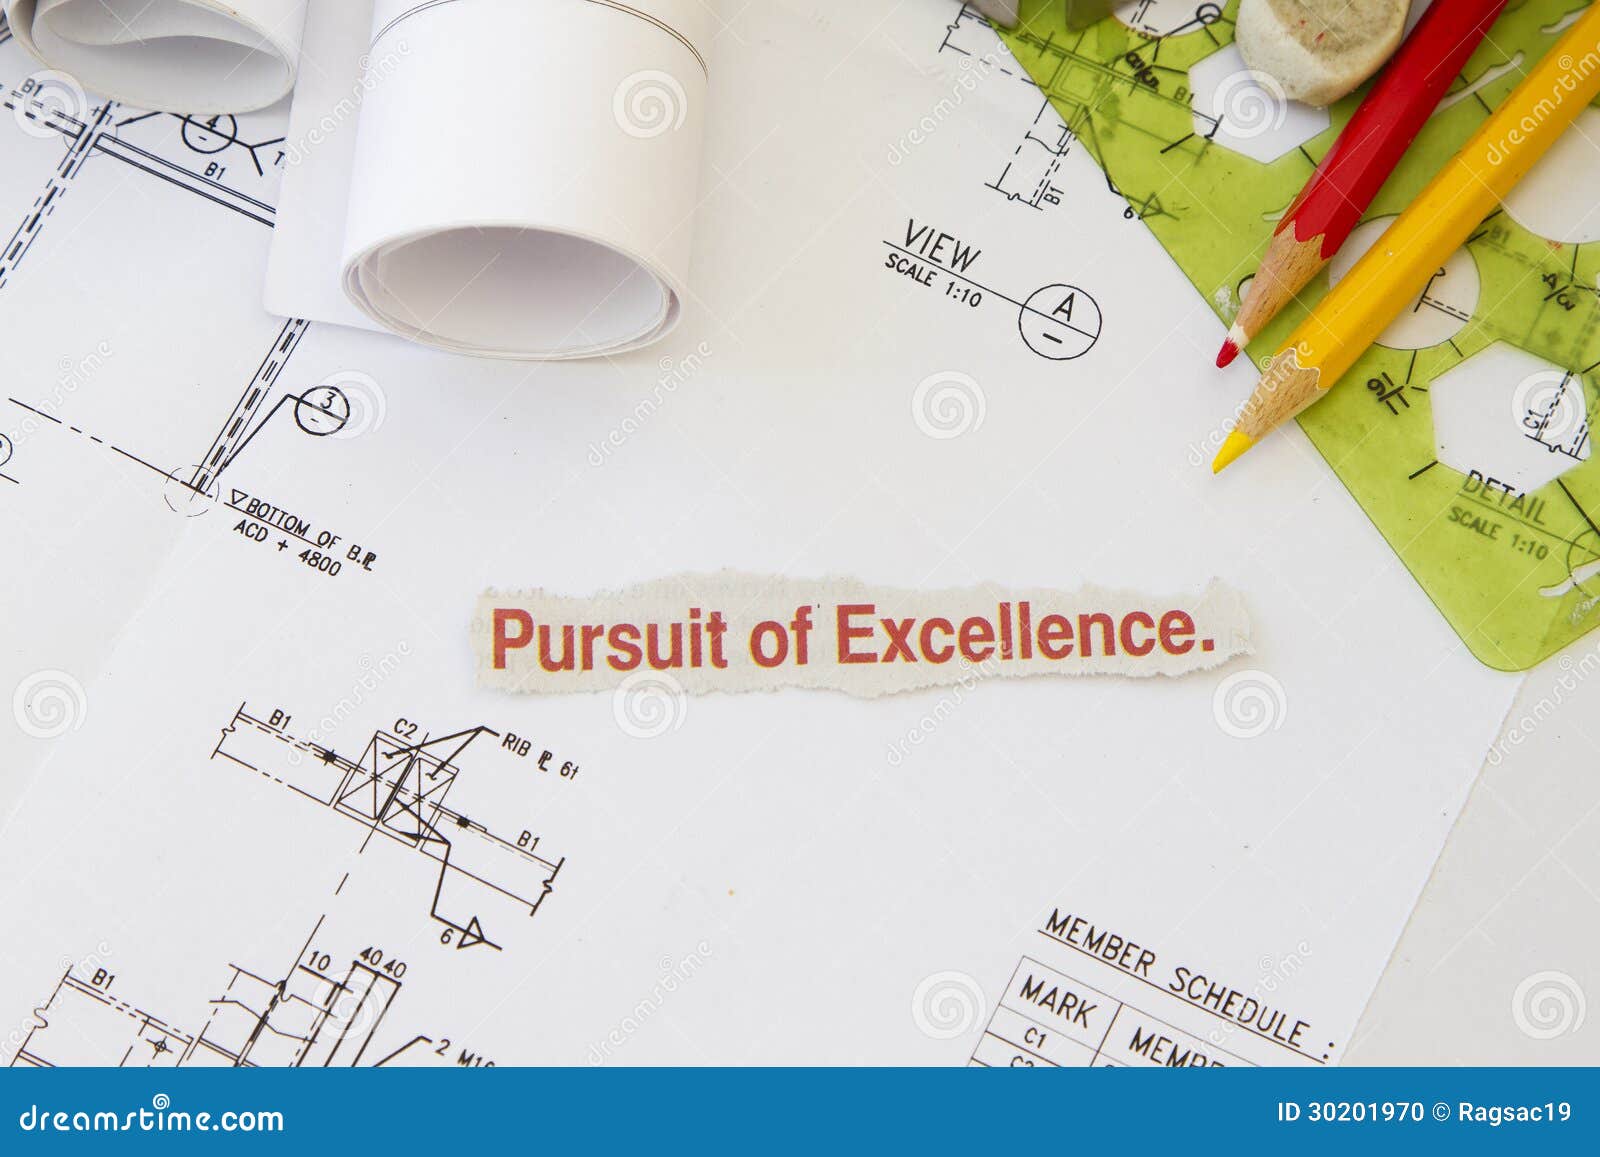 pursuit of excellence